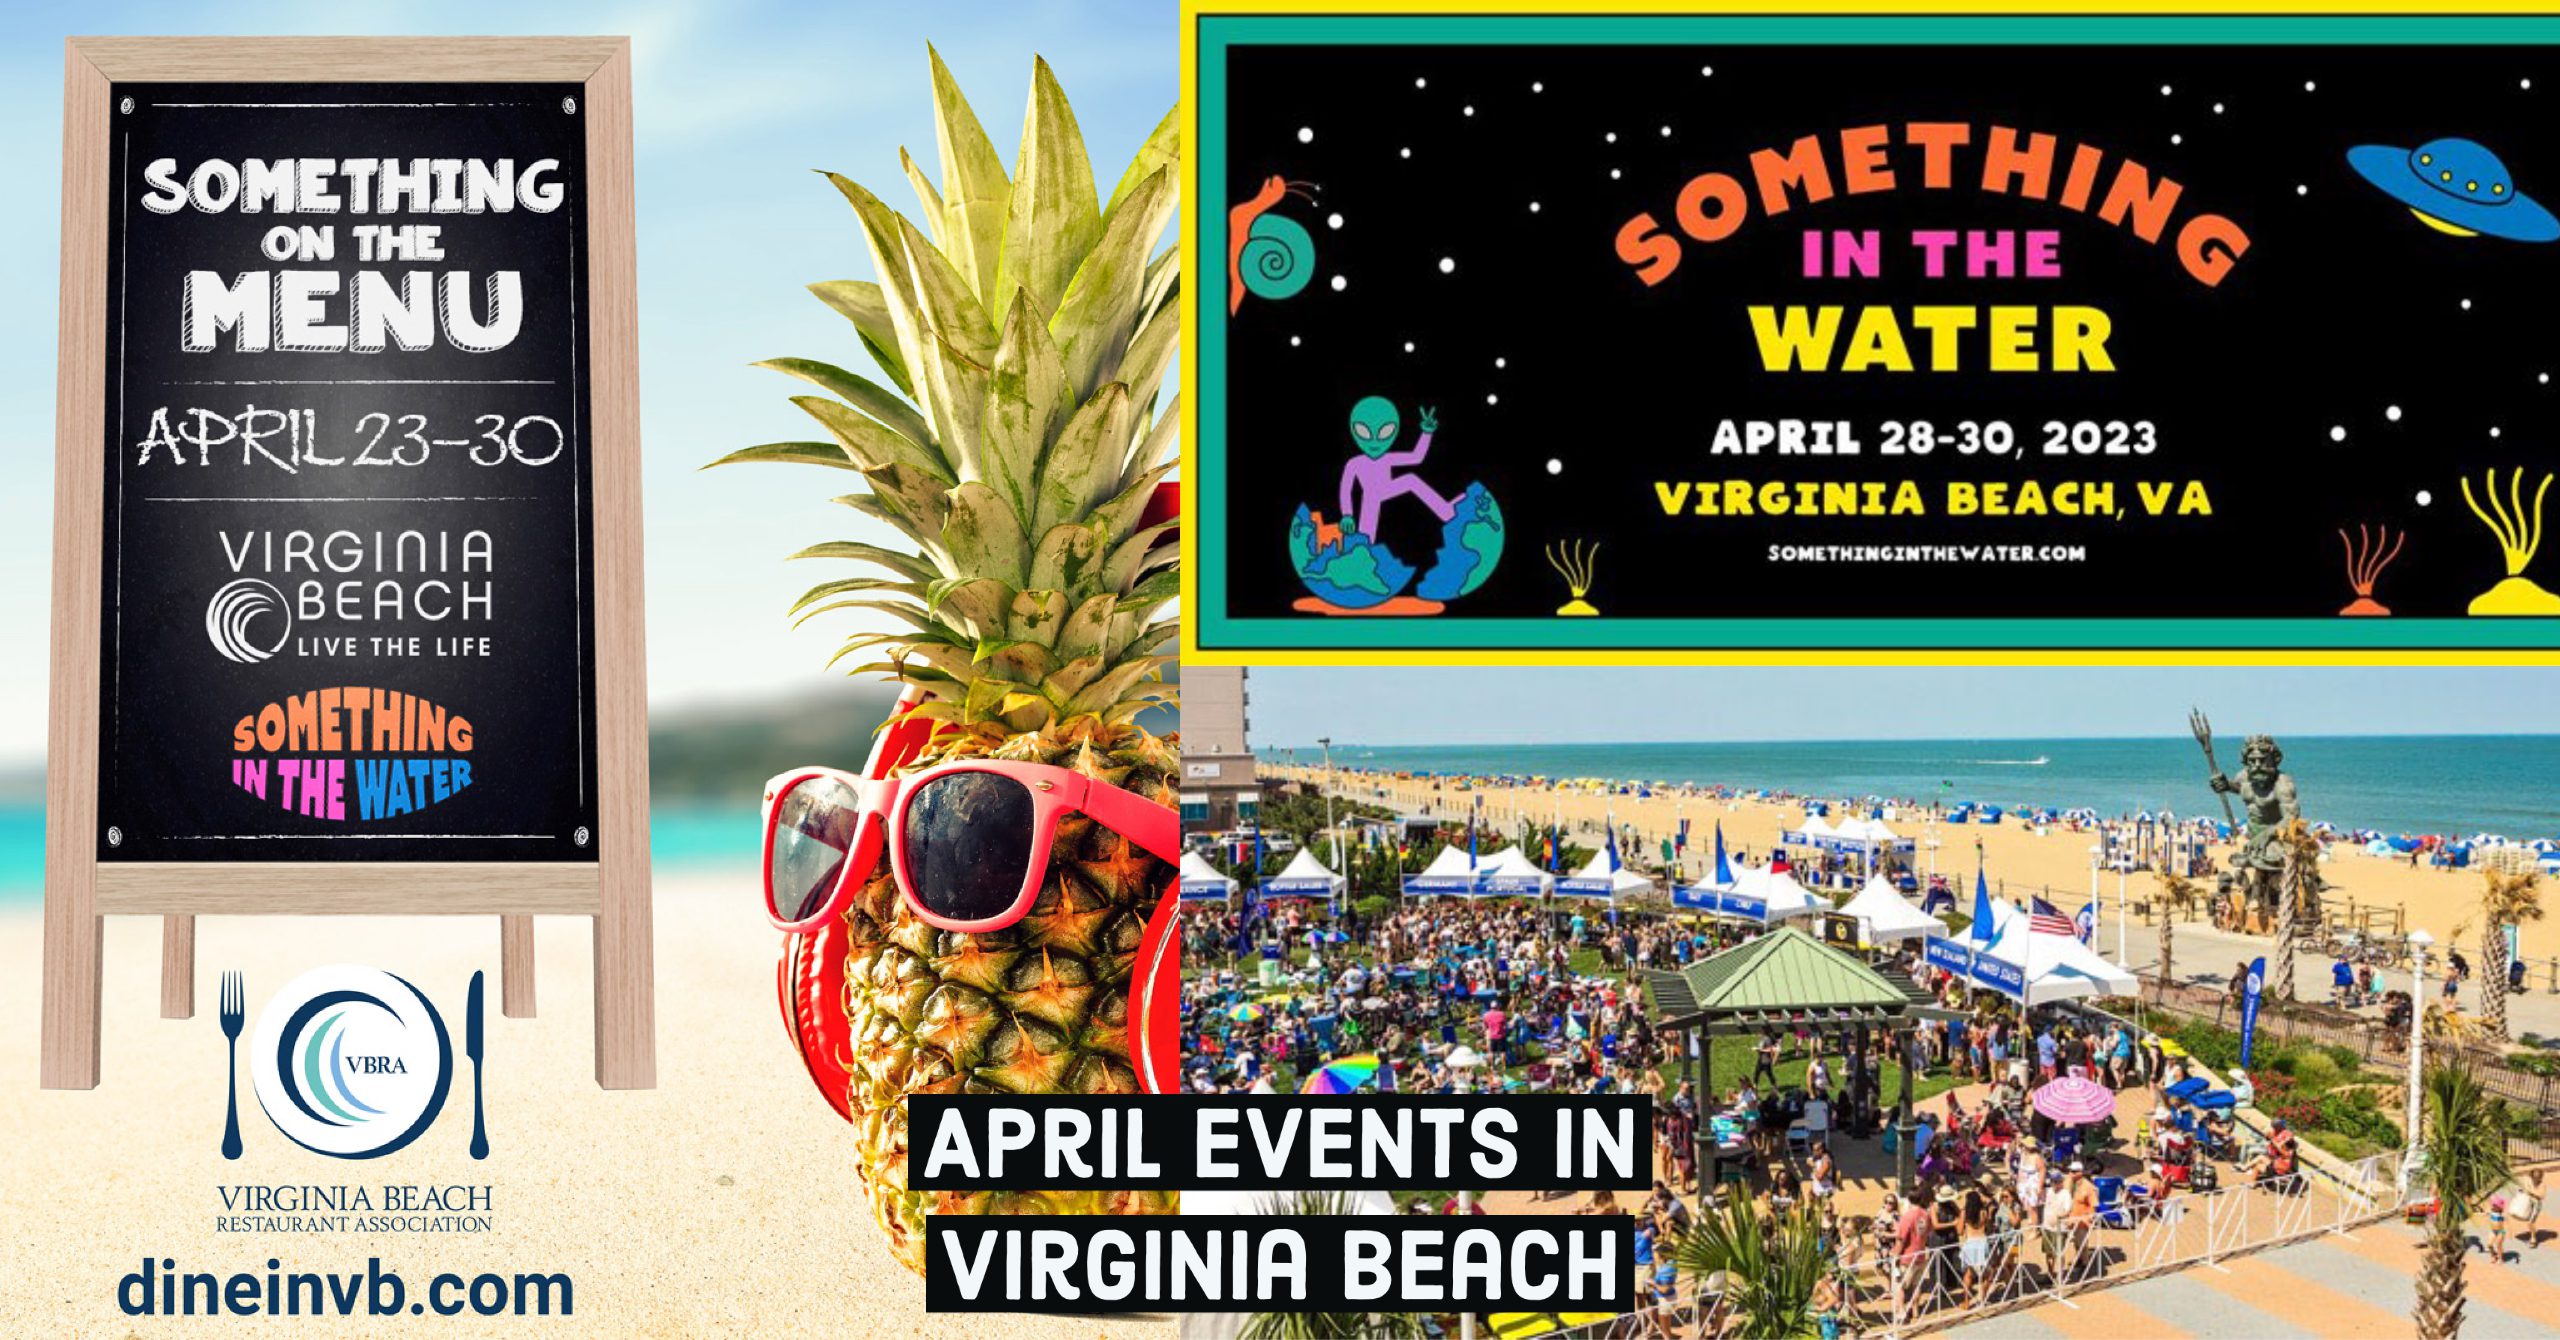 Virginia Beach Oceanfront Events April 2023